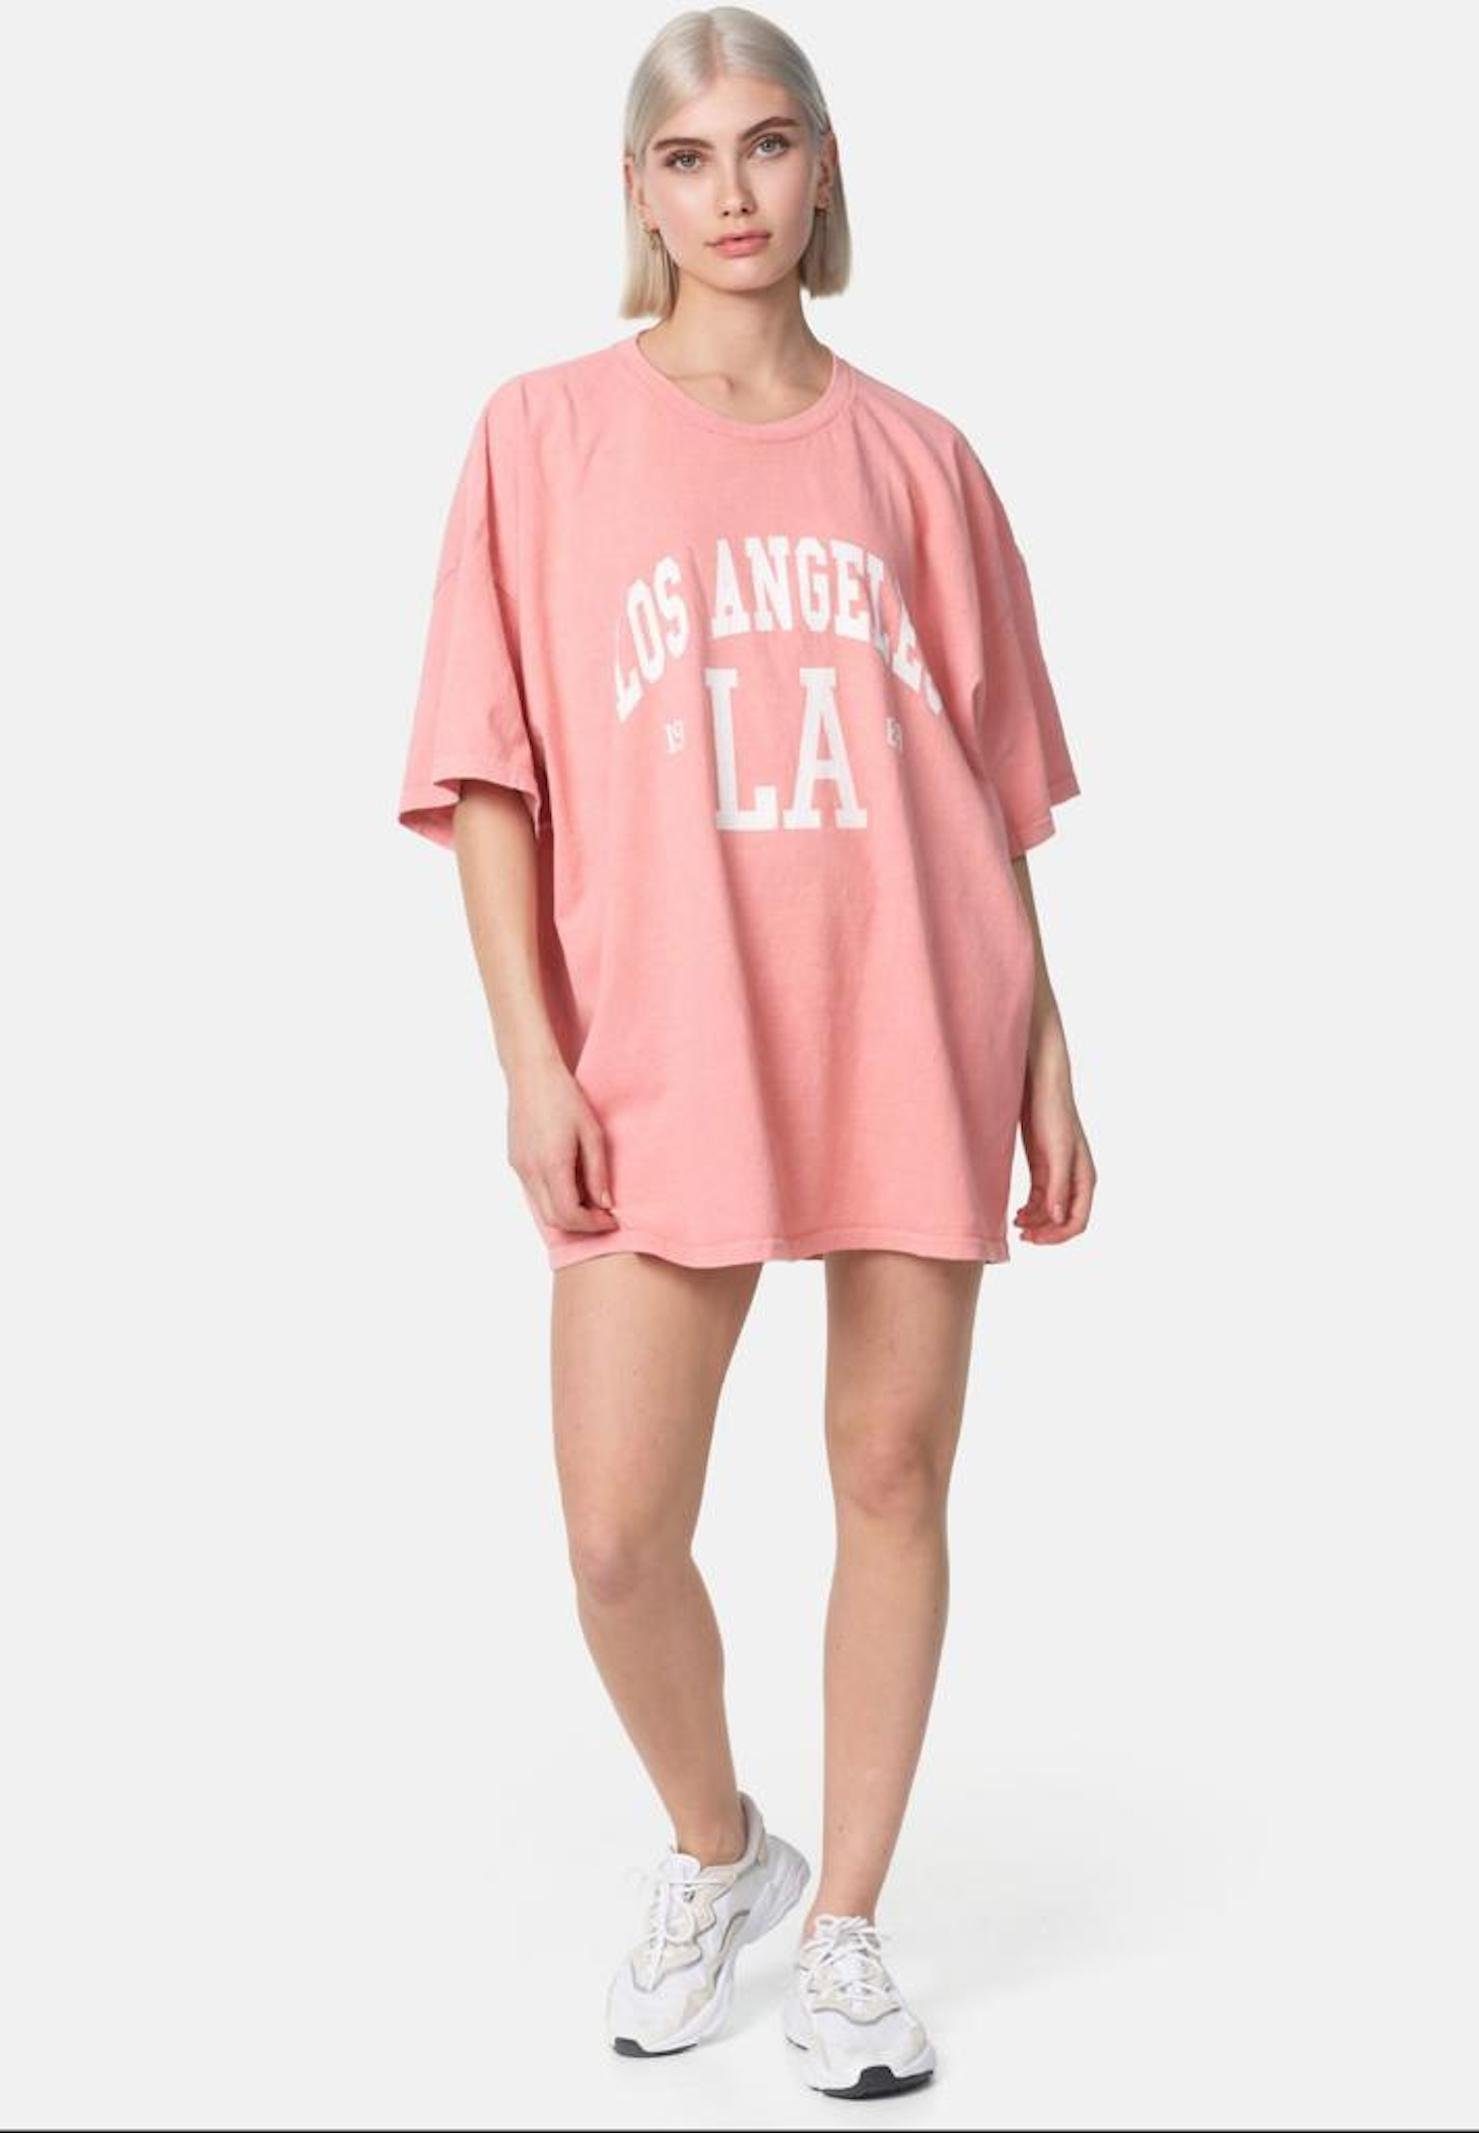 Worldclassca T-Shirt Worldclassca Oversized LA LOS ANGELES Print T-Shirt lang Sommer Tee Apricot